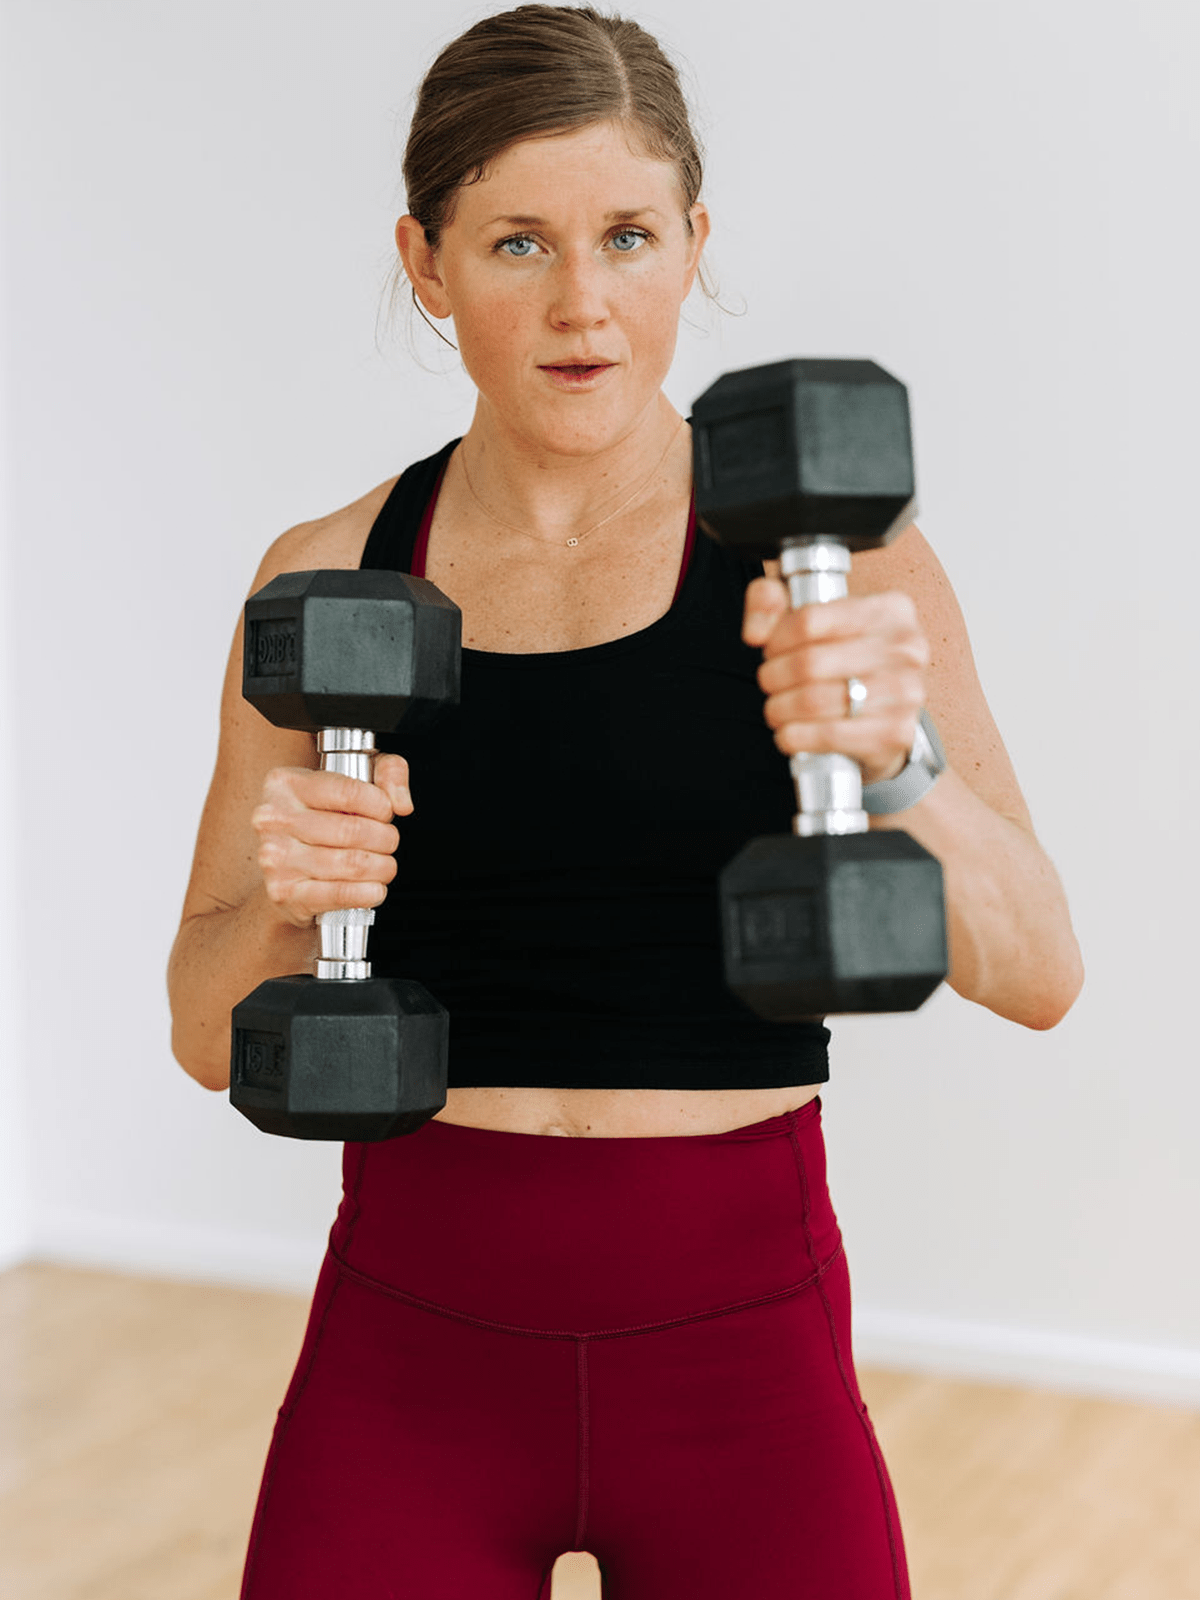 10-Minute Arm Workout for Women (Dumbbells) - Nourish, Move, Love